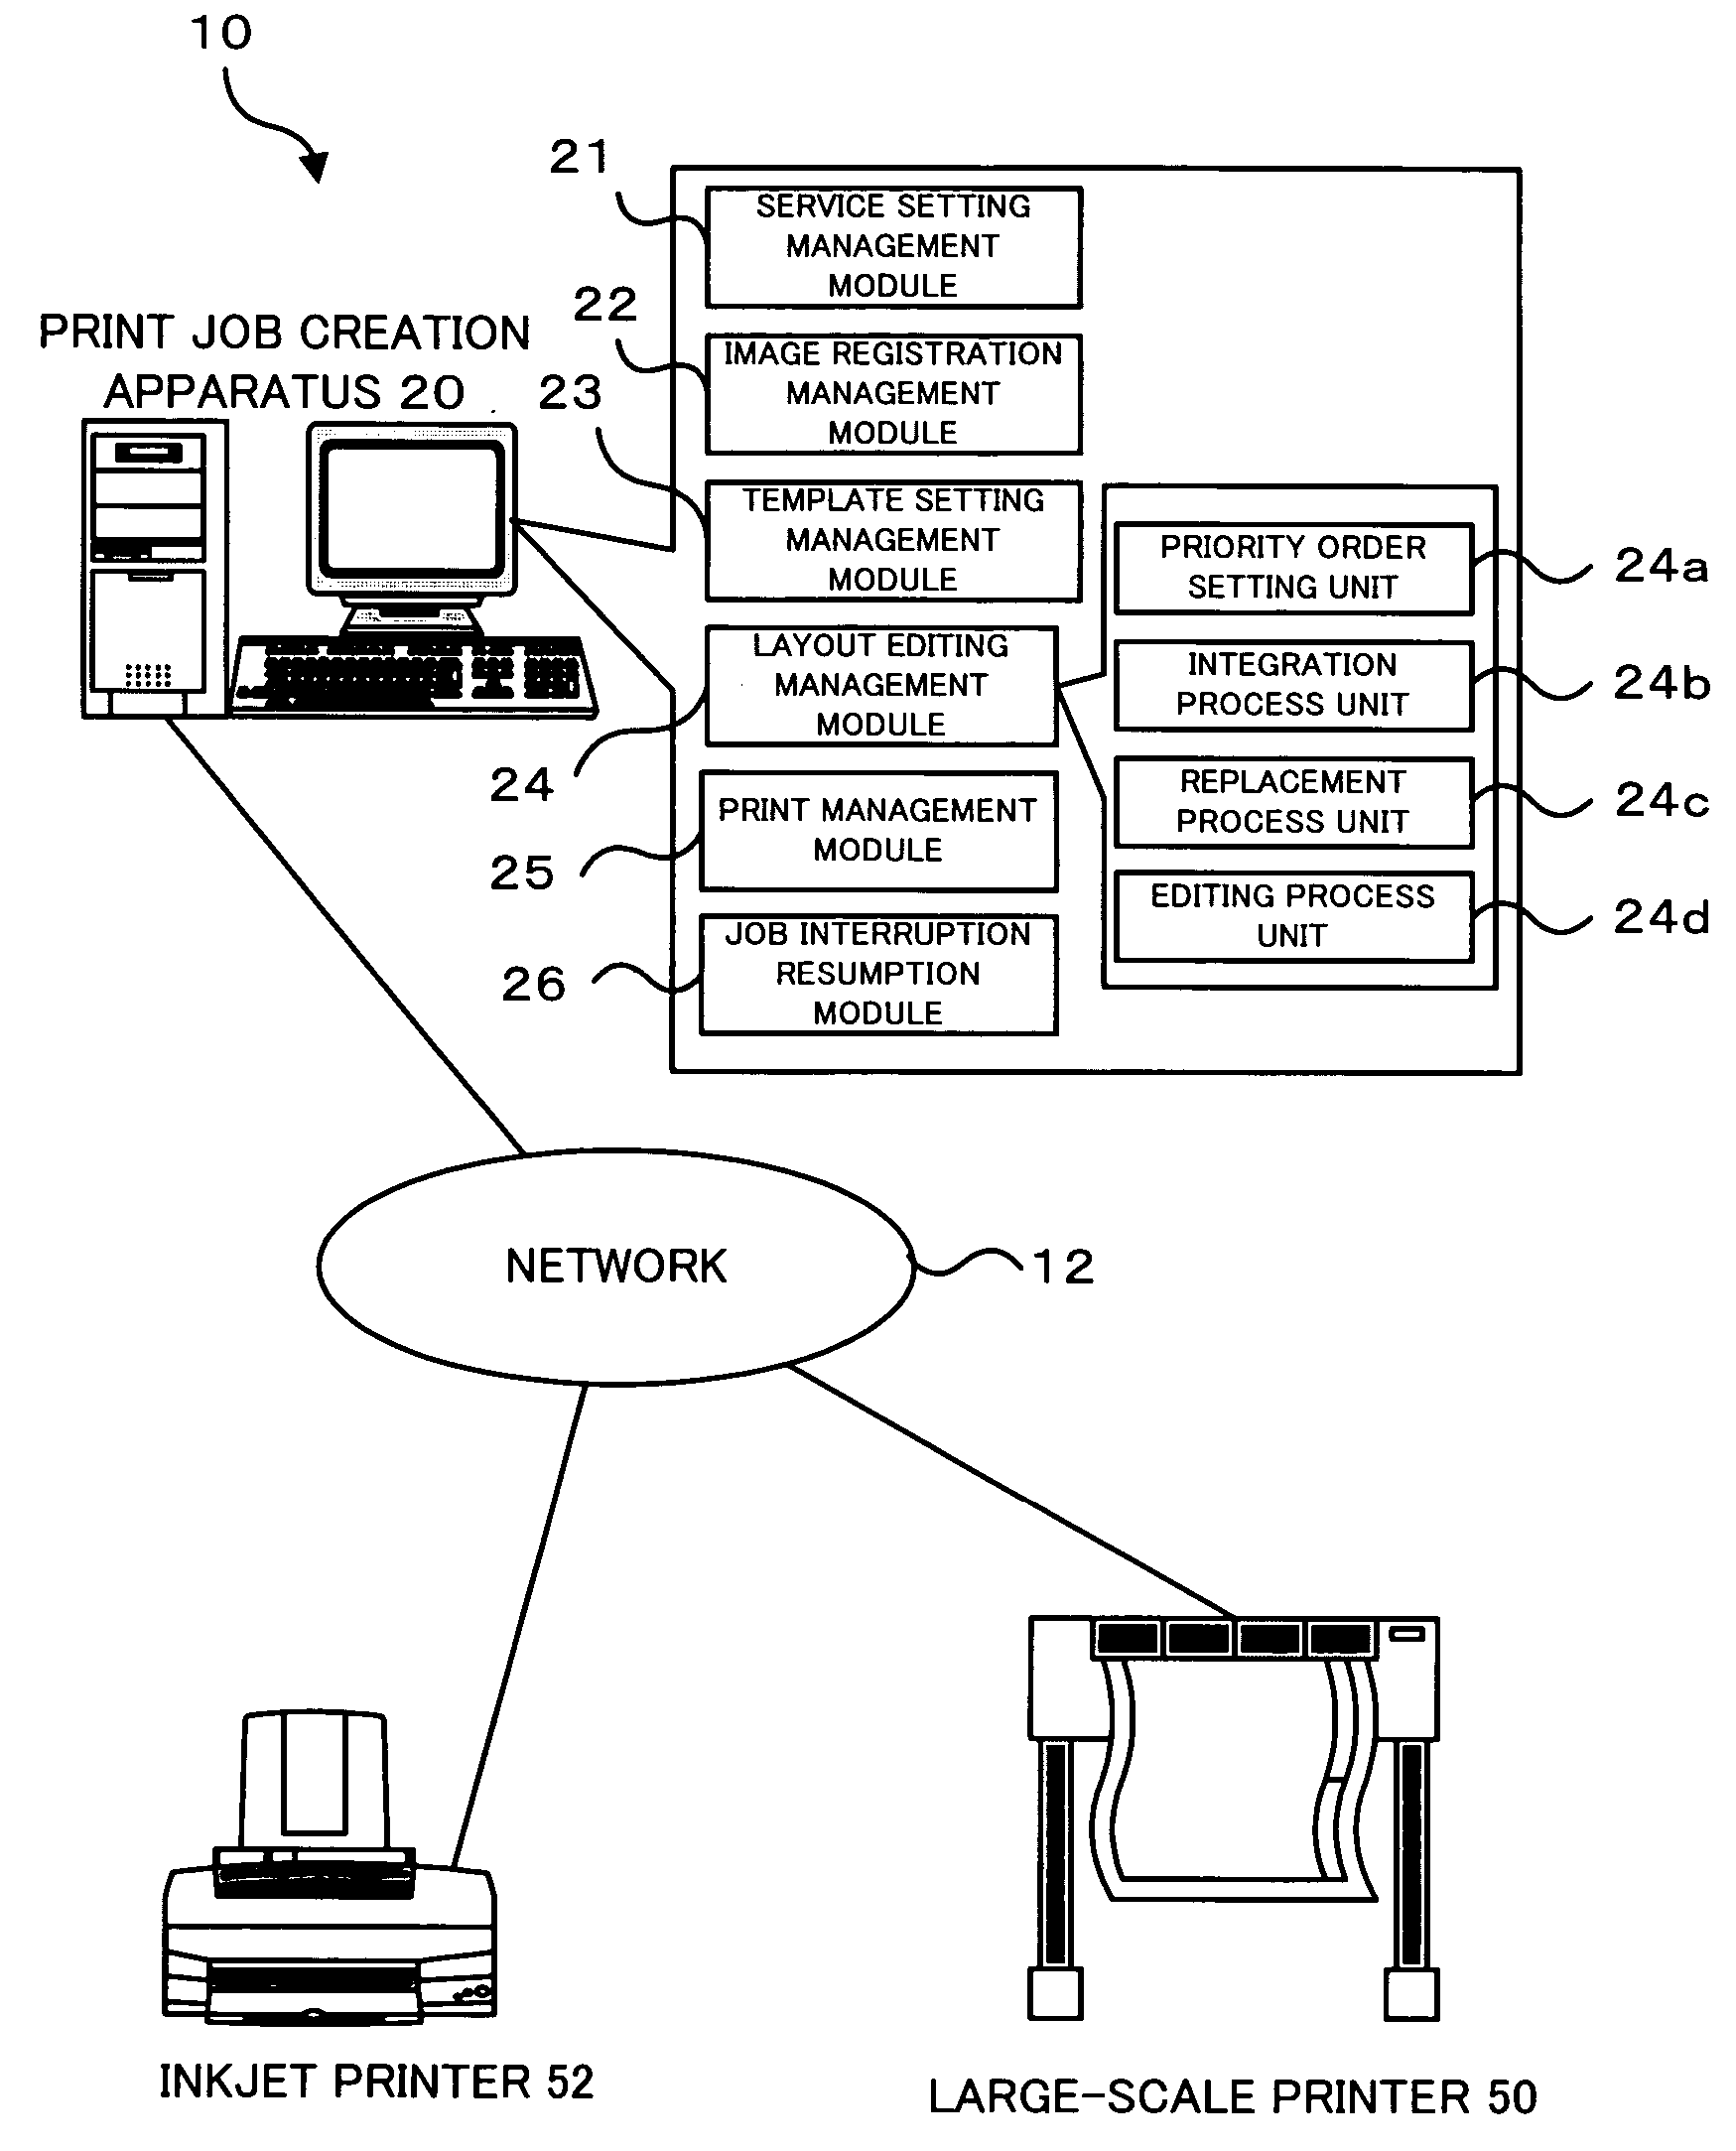 Print job creation apparatus and print job creation method